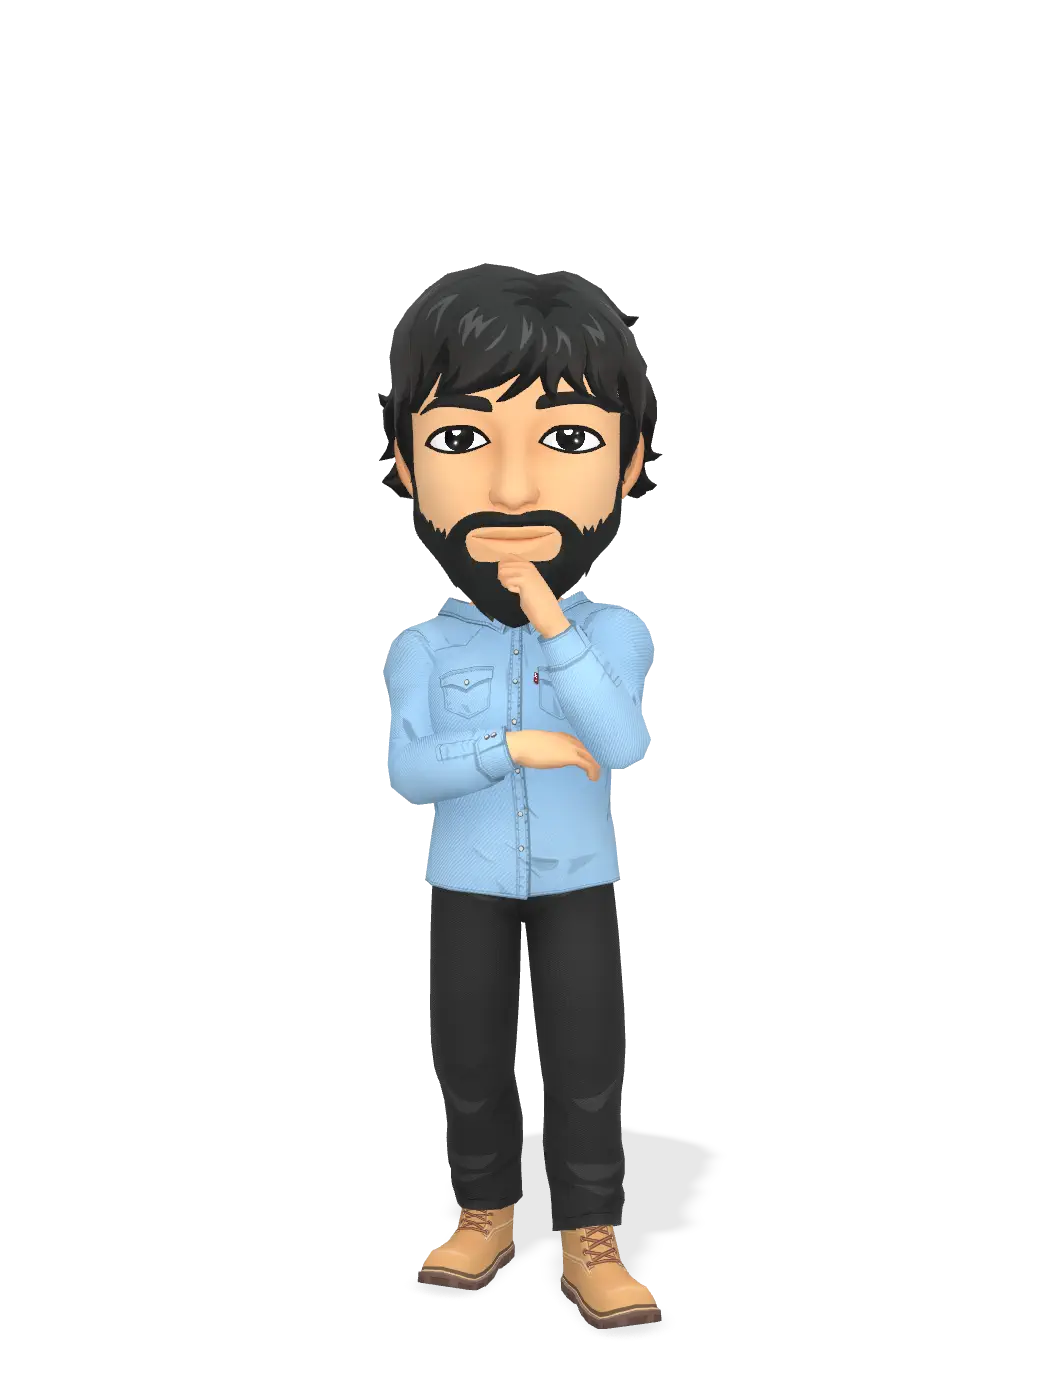 3D Bitmoji for jayant20019 avatar